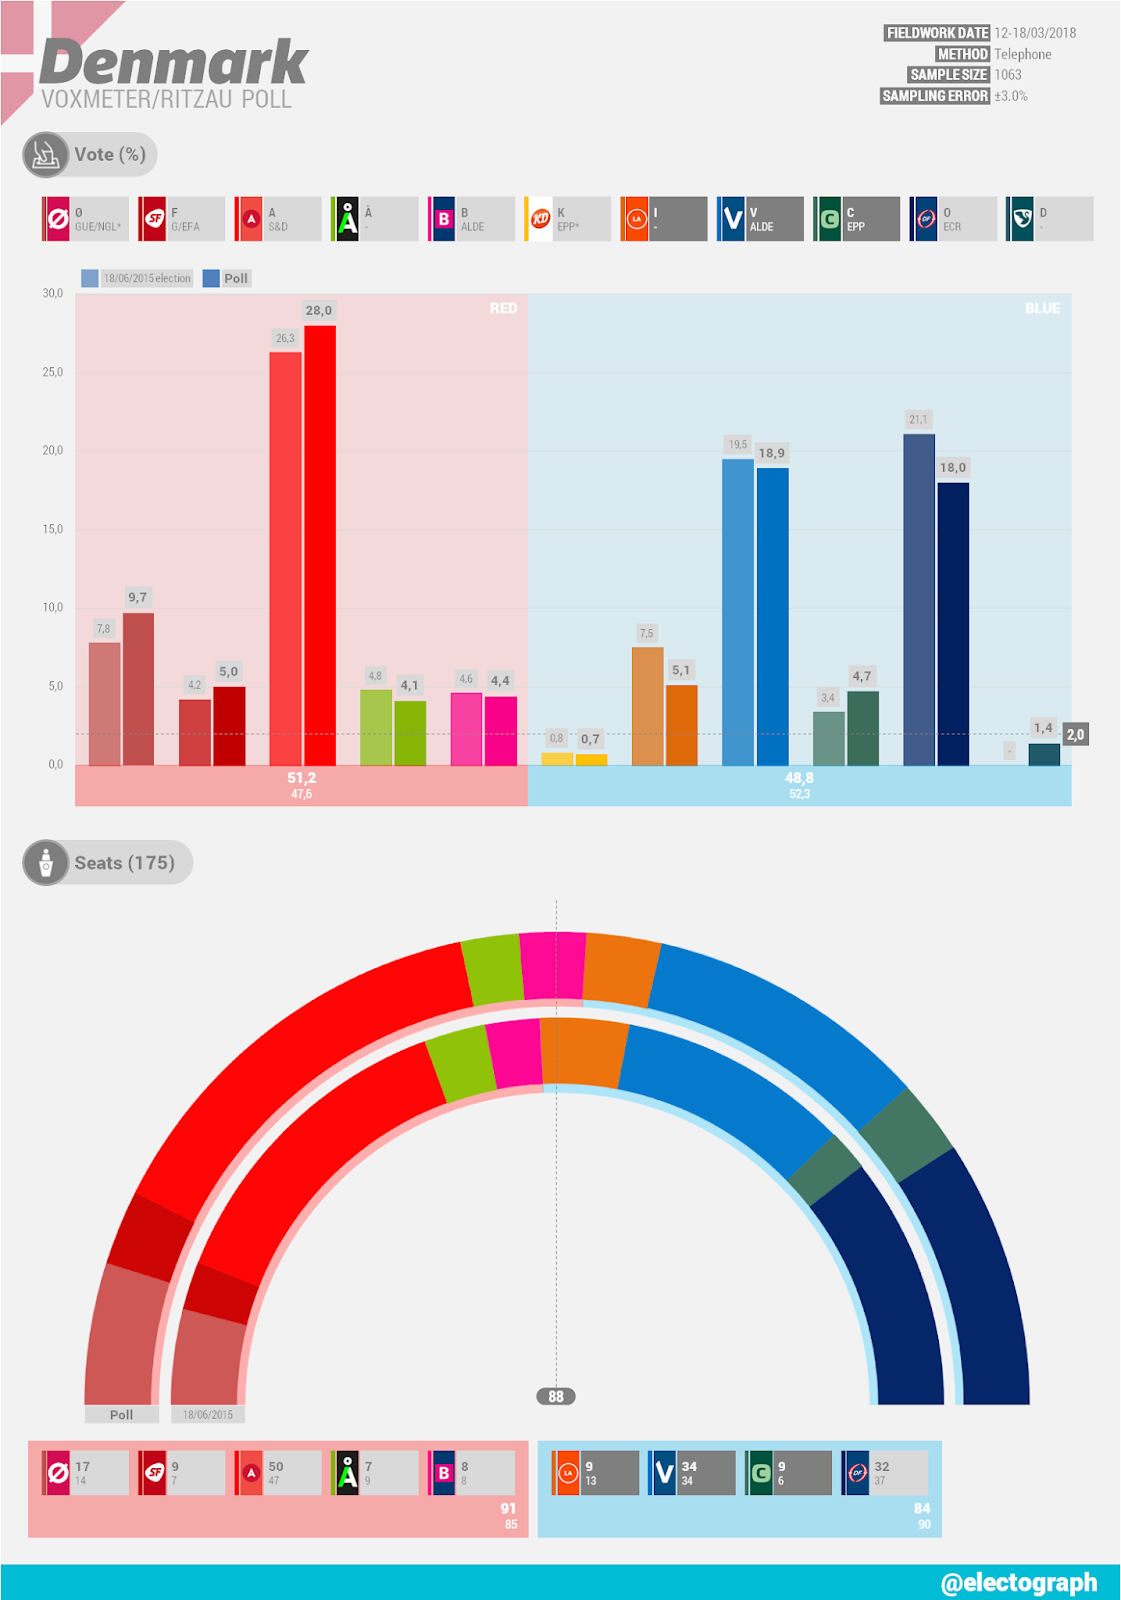 DENMARK Voxmeter poll chart for Ritzau, March 2018